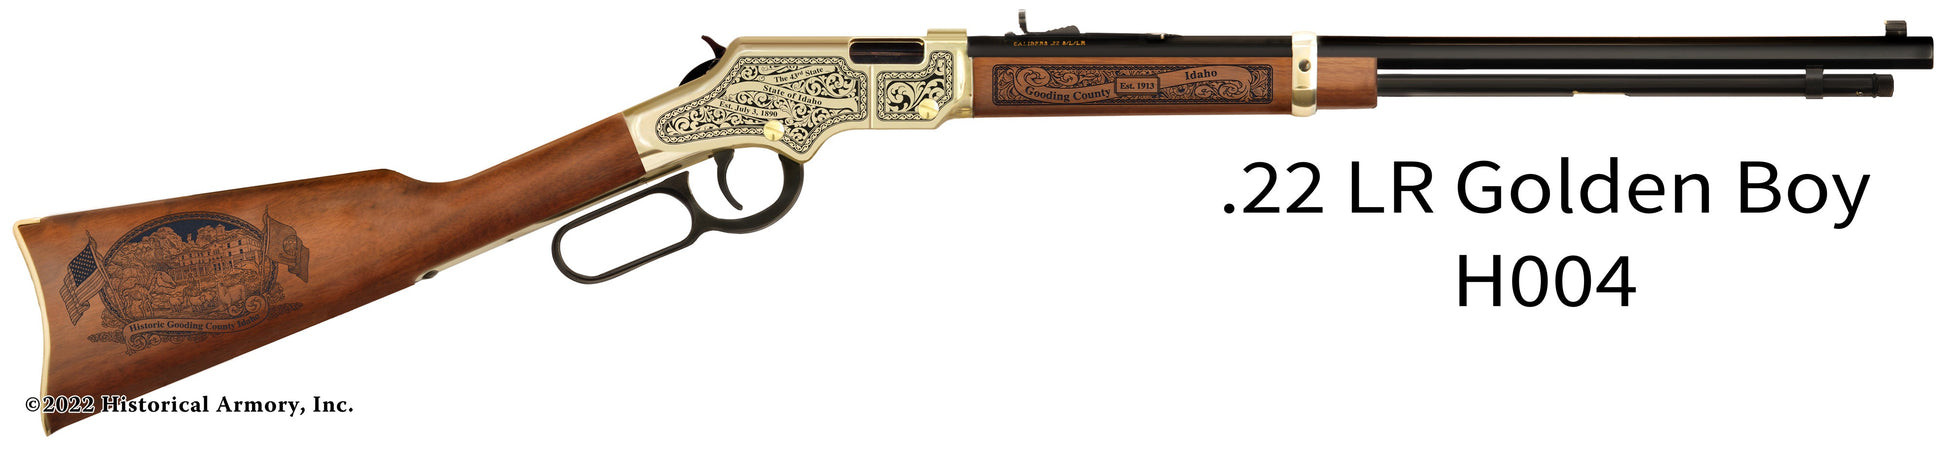 Gooding County Idaho Engraved Henry Golden Boy Rifle